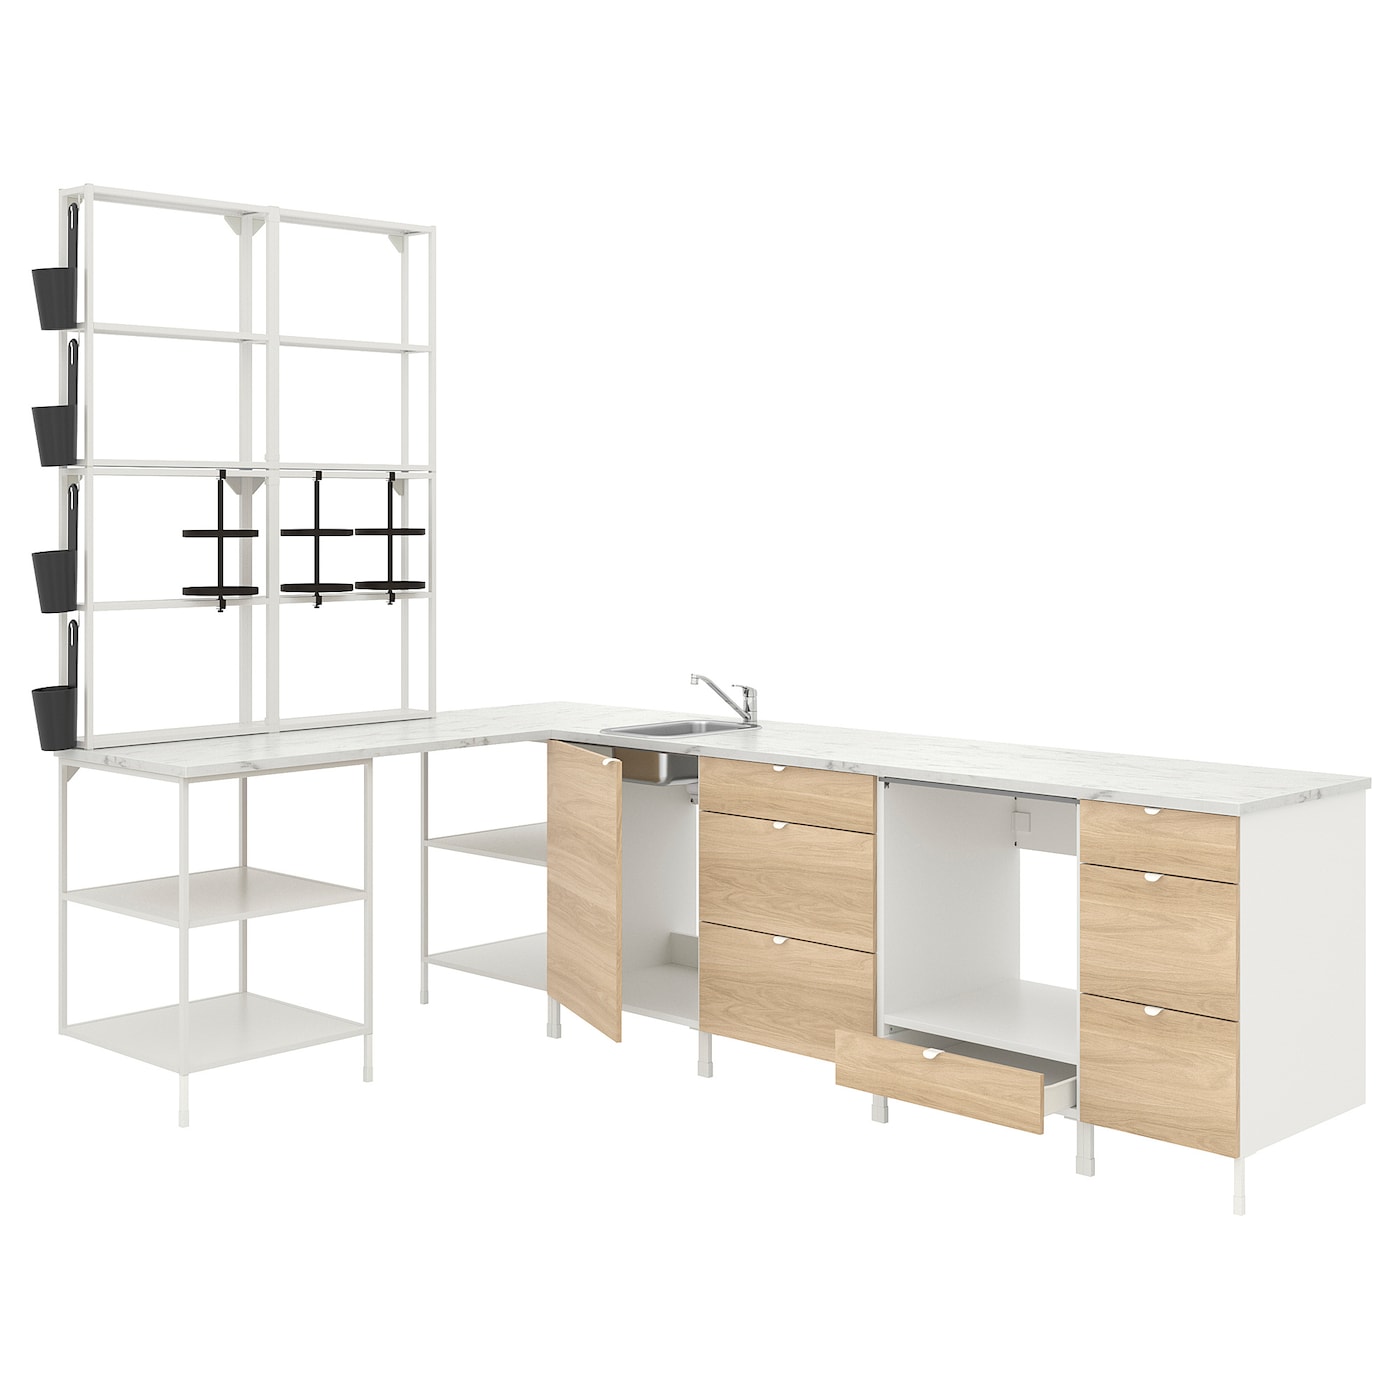 Угловая кухонная комбинация для хранения - ENHET  IKEA/ ЭНХЕТ ИКЕА, 181,5х281,5х75 см, белый/бежевый